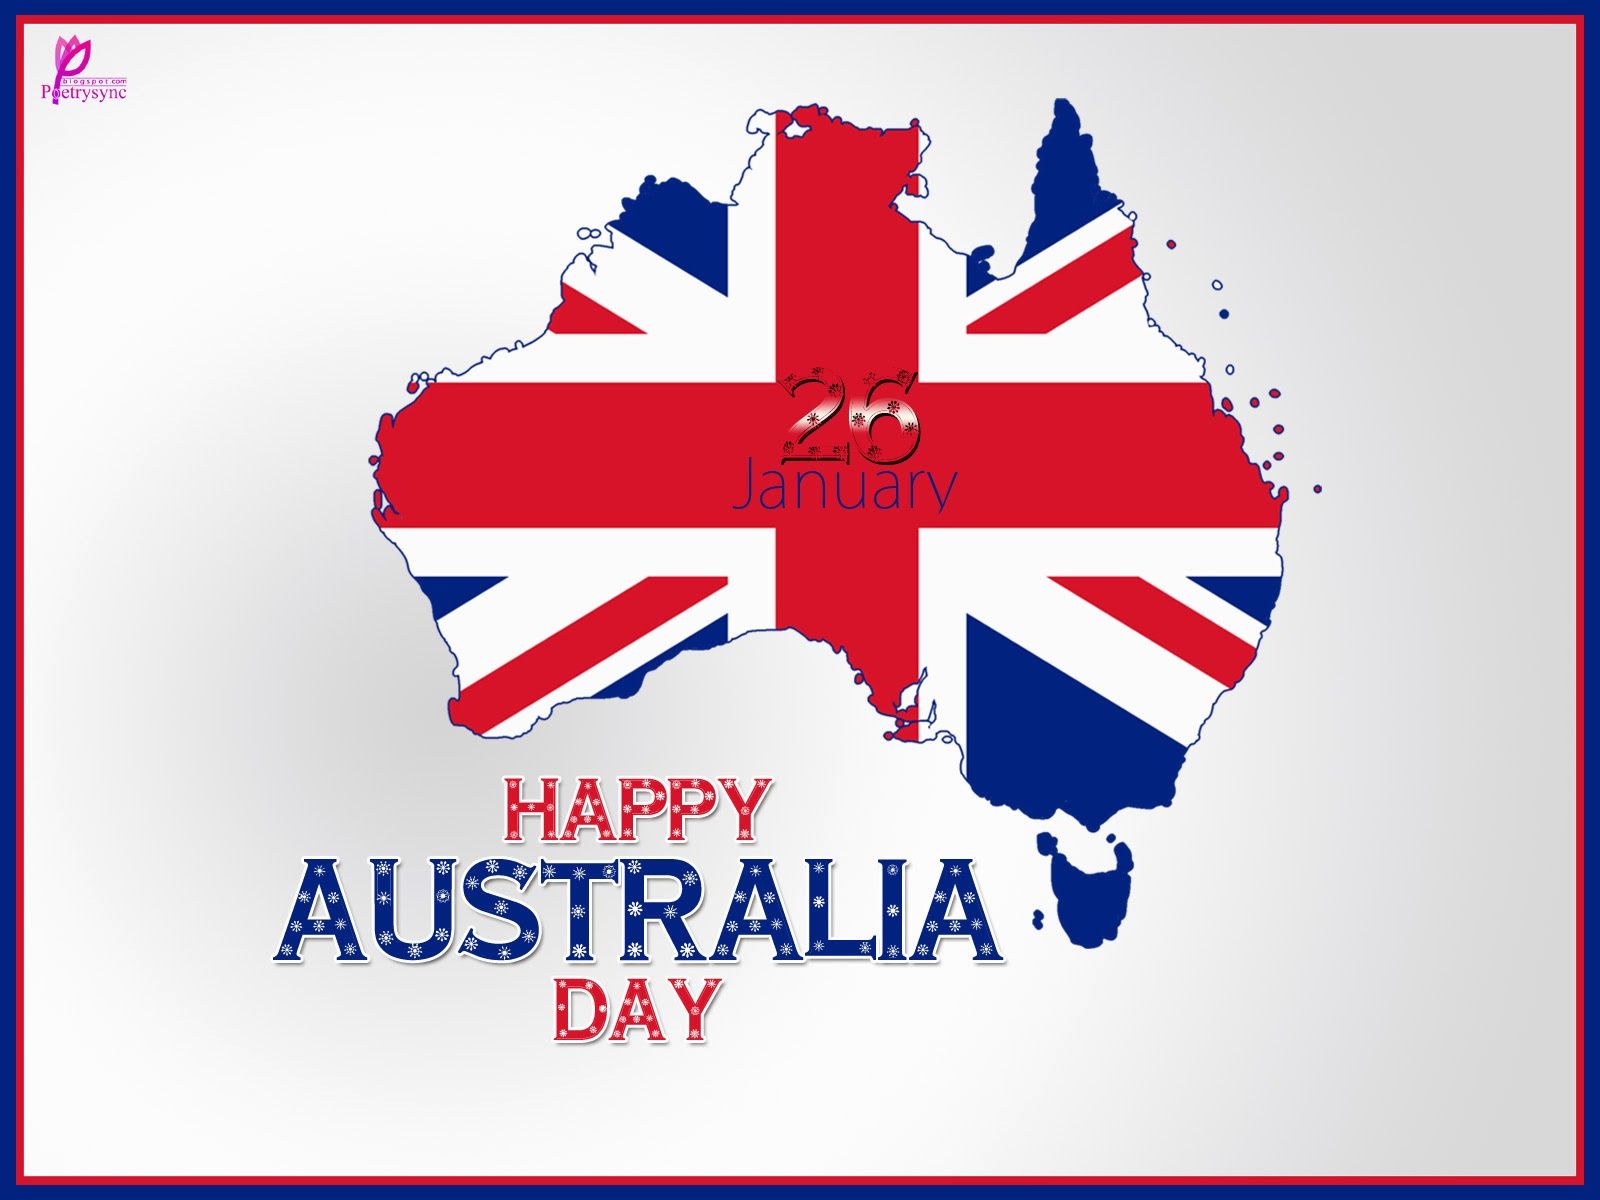 Australia Day Map Flag Beautiful Wallpaper Australia Day is 26 January. Happy australia day, Australia day, Birthday text